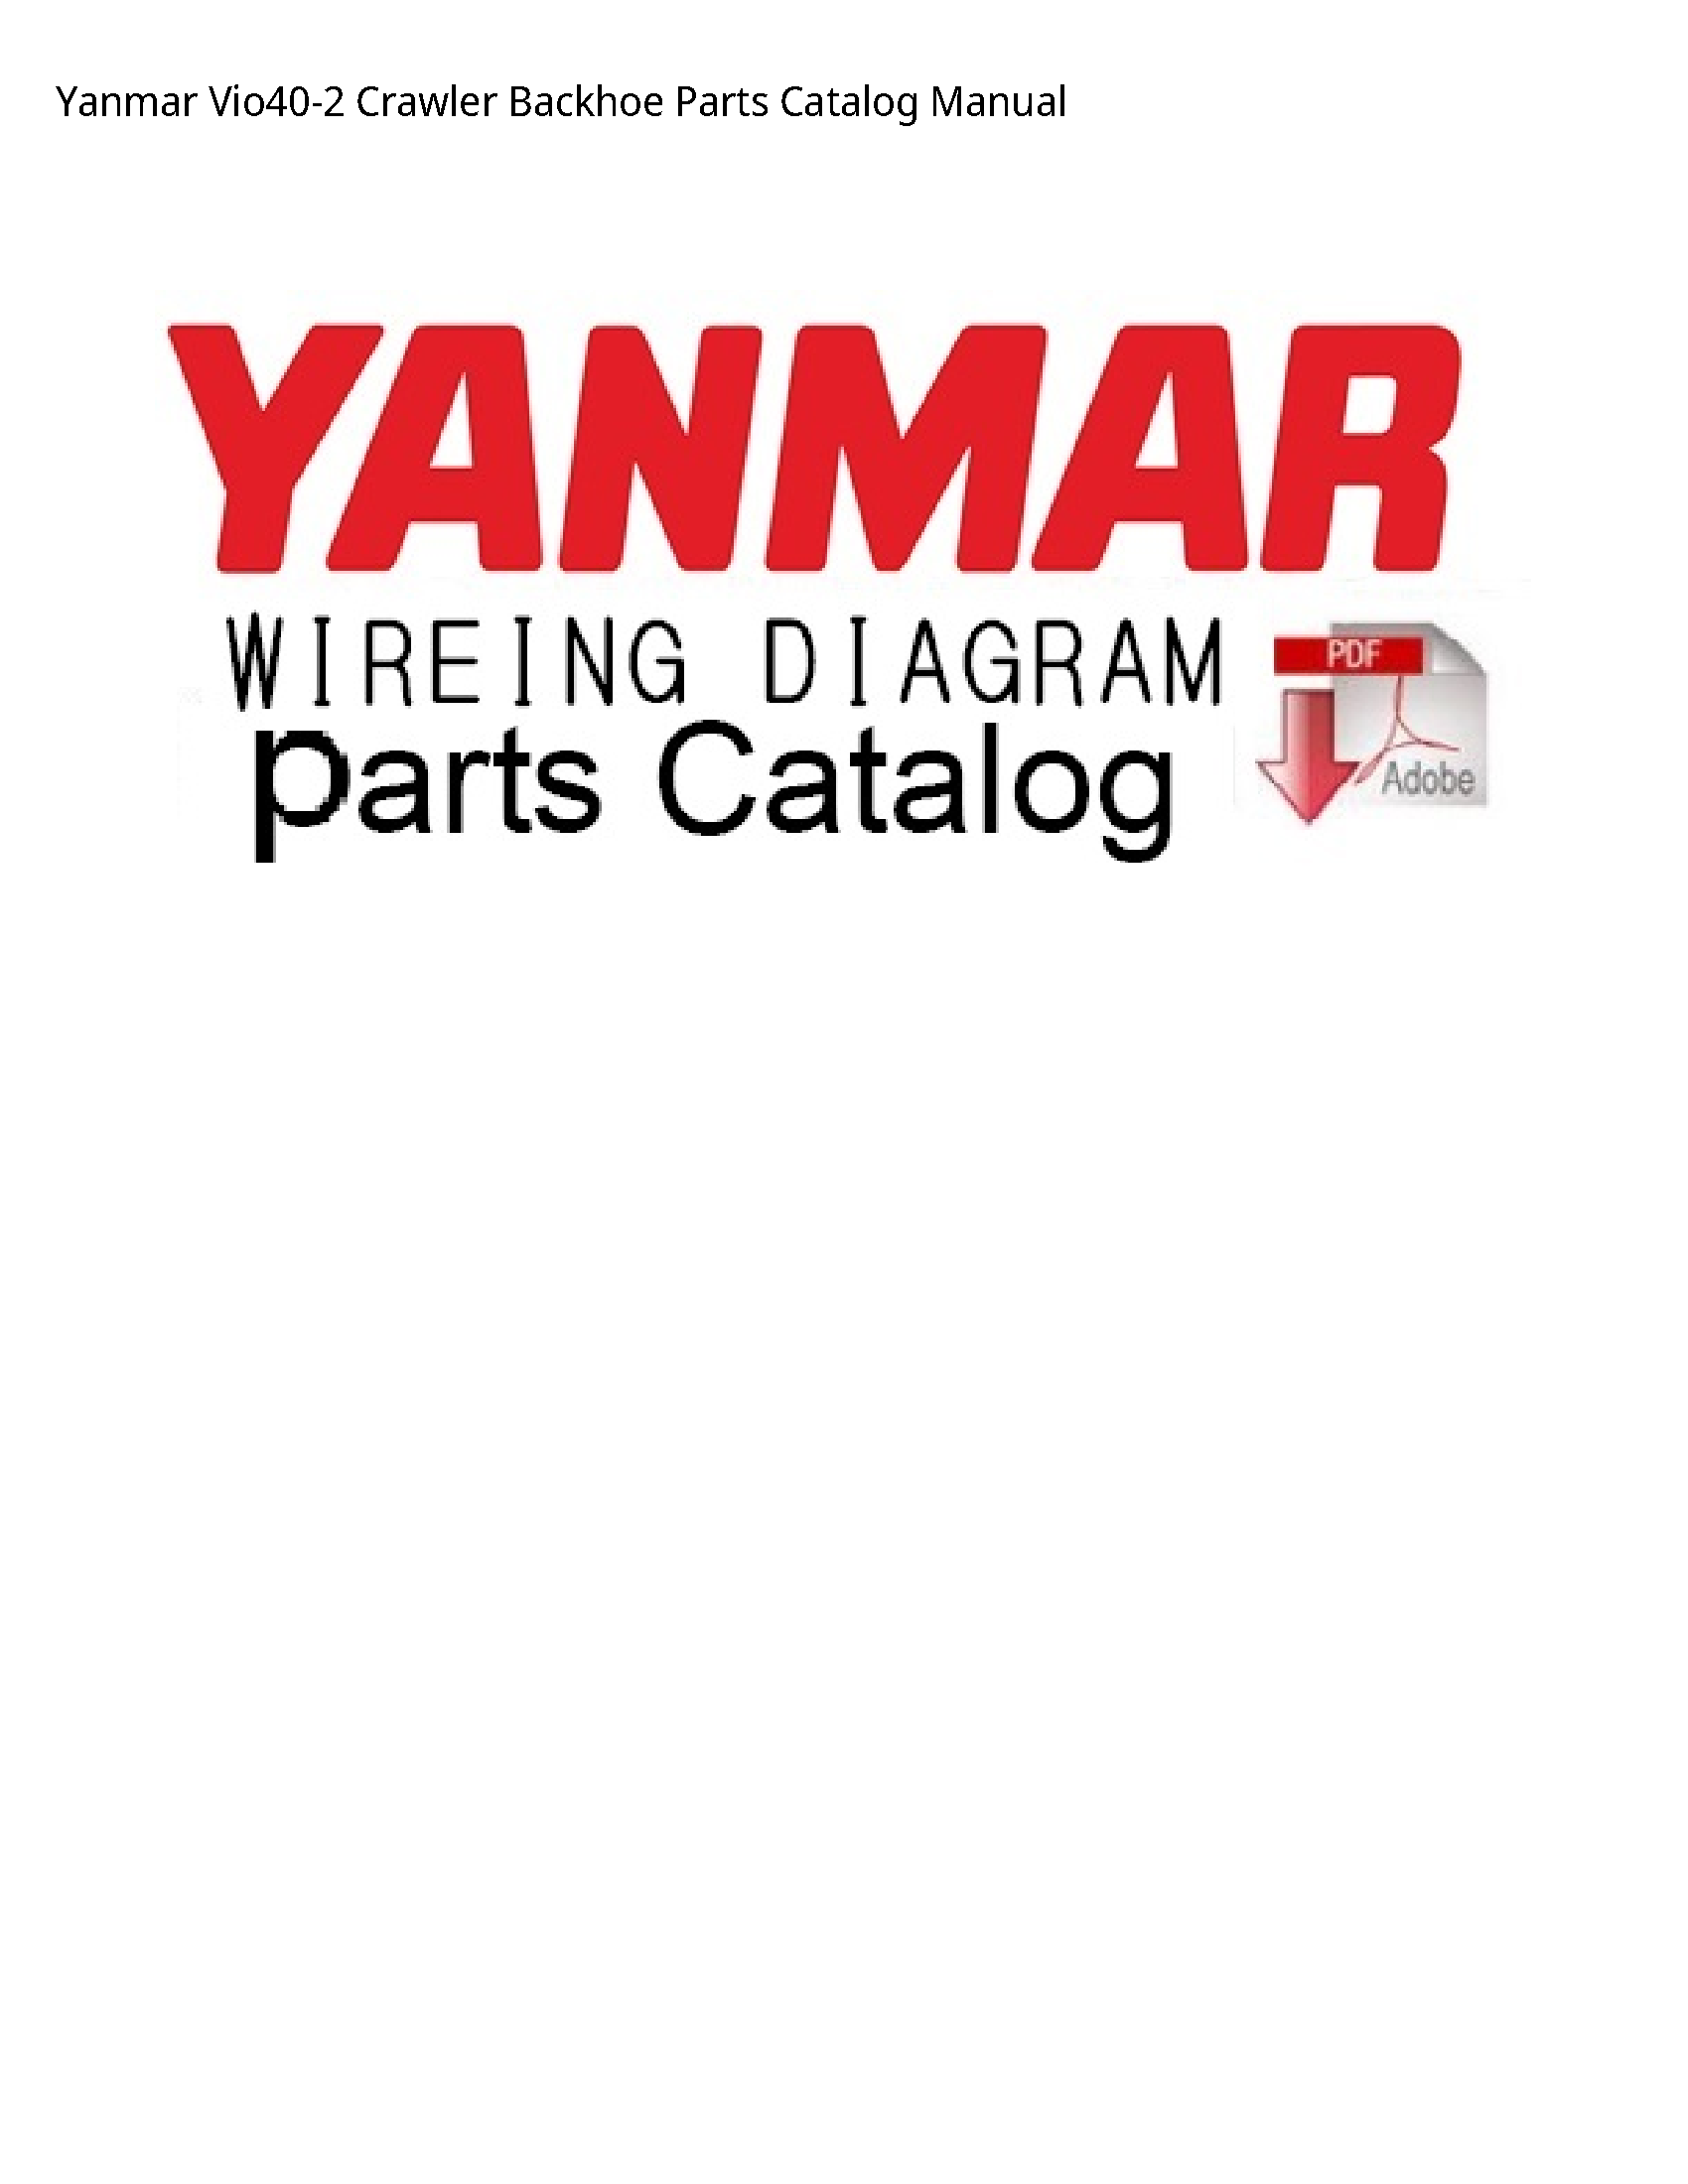 Yanmar Vio40-2 Crawler Backhoe Parts Catalog manual